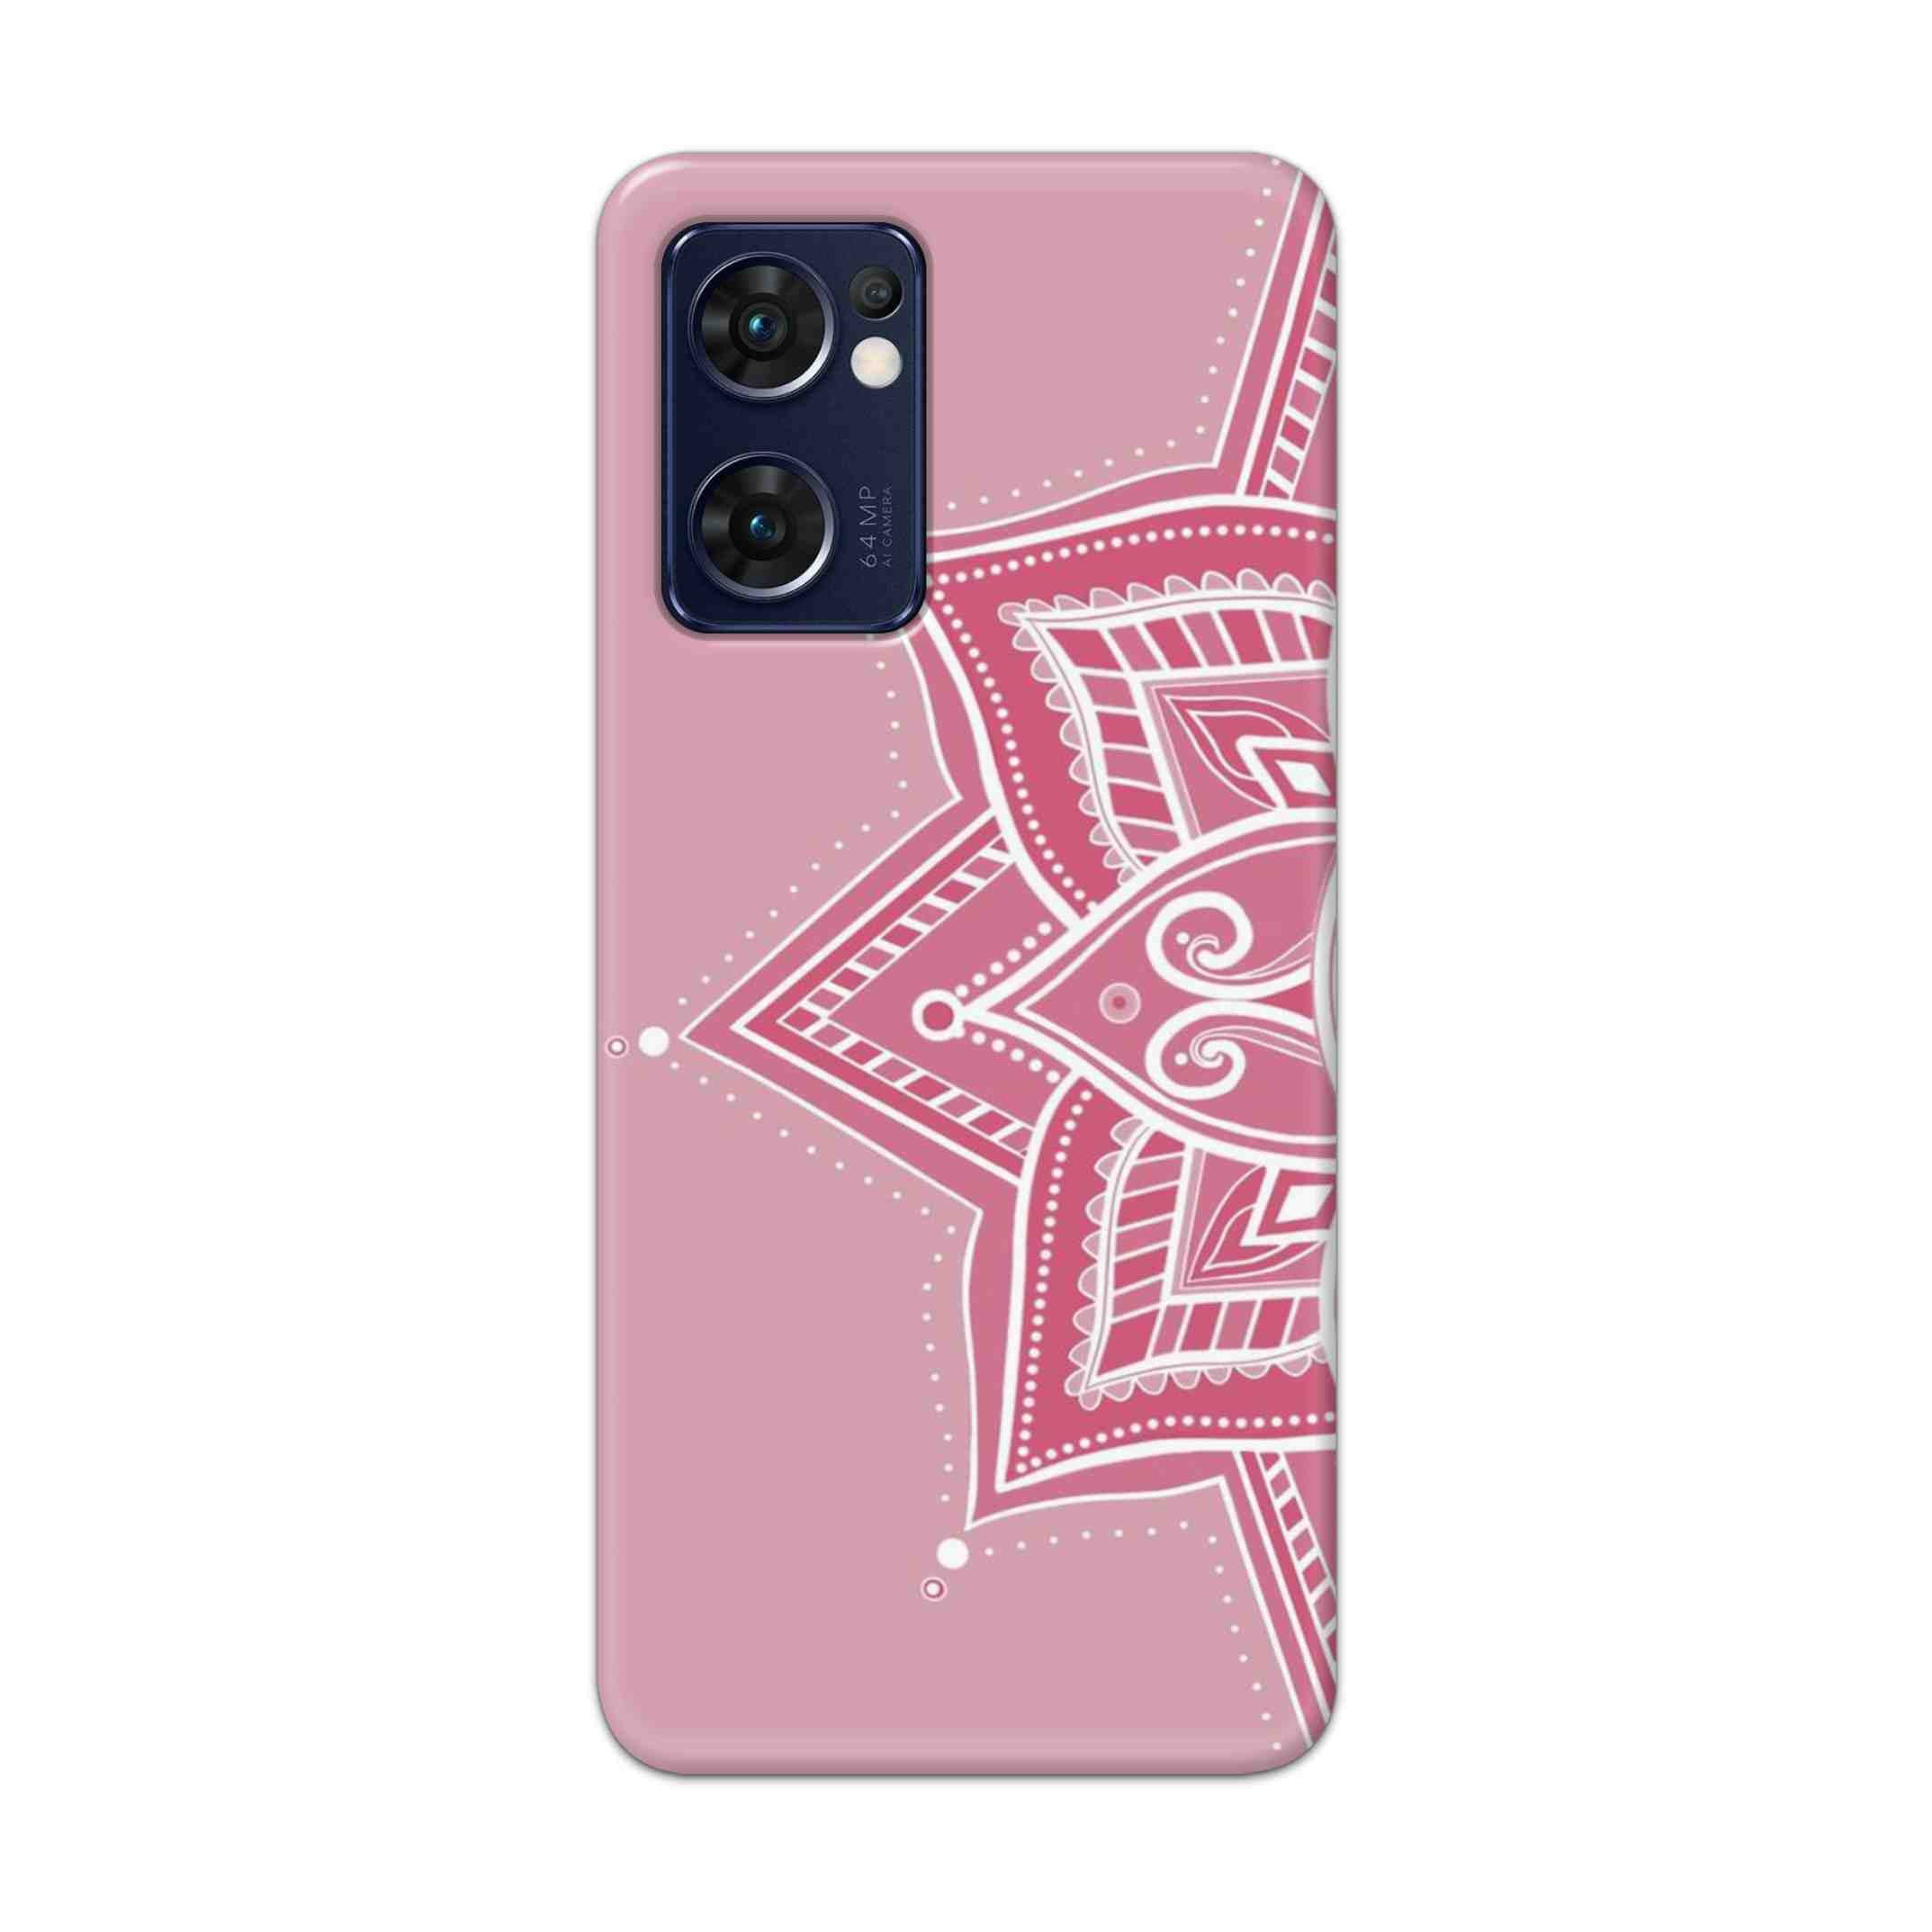 Buy Pink Rangoli Hard Back Mobile Phone Case Cover For Reno 7 5G Online